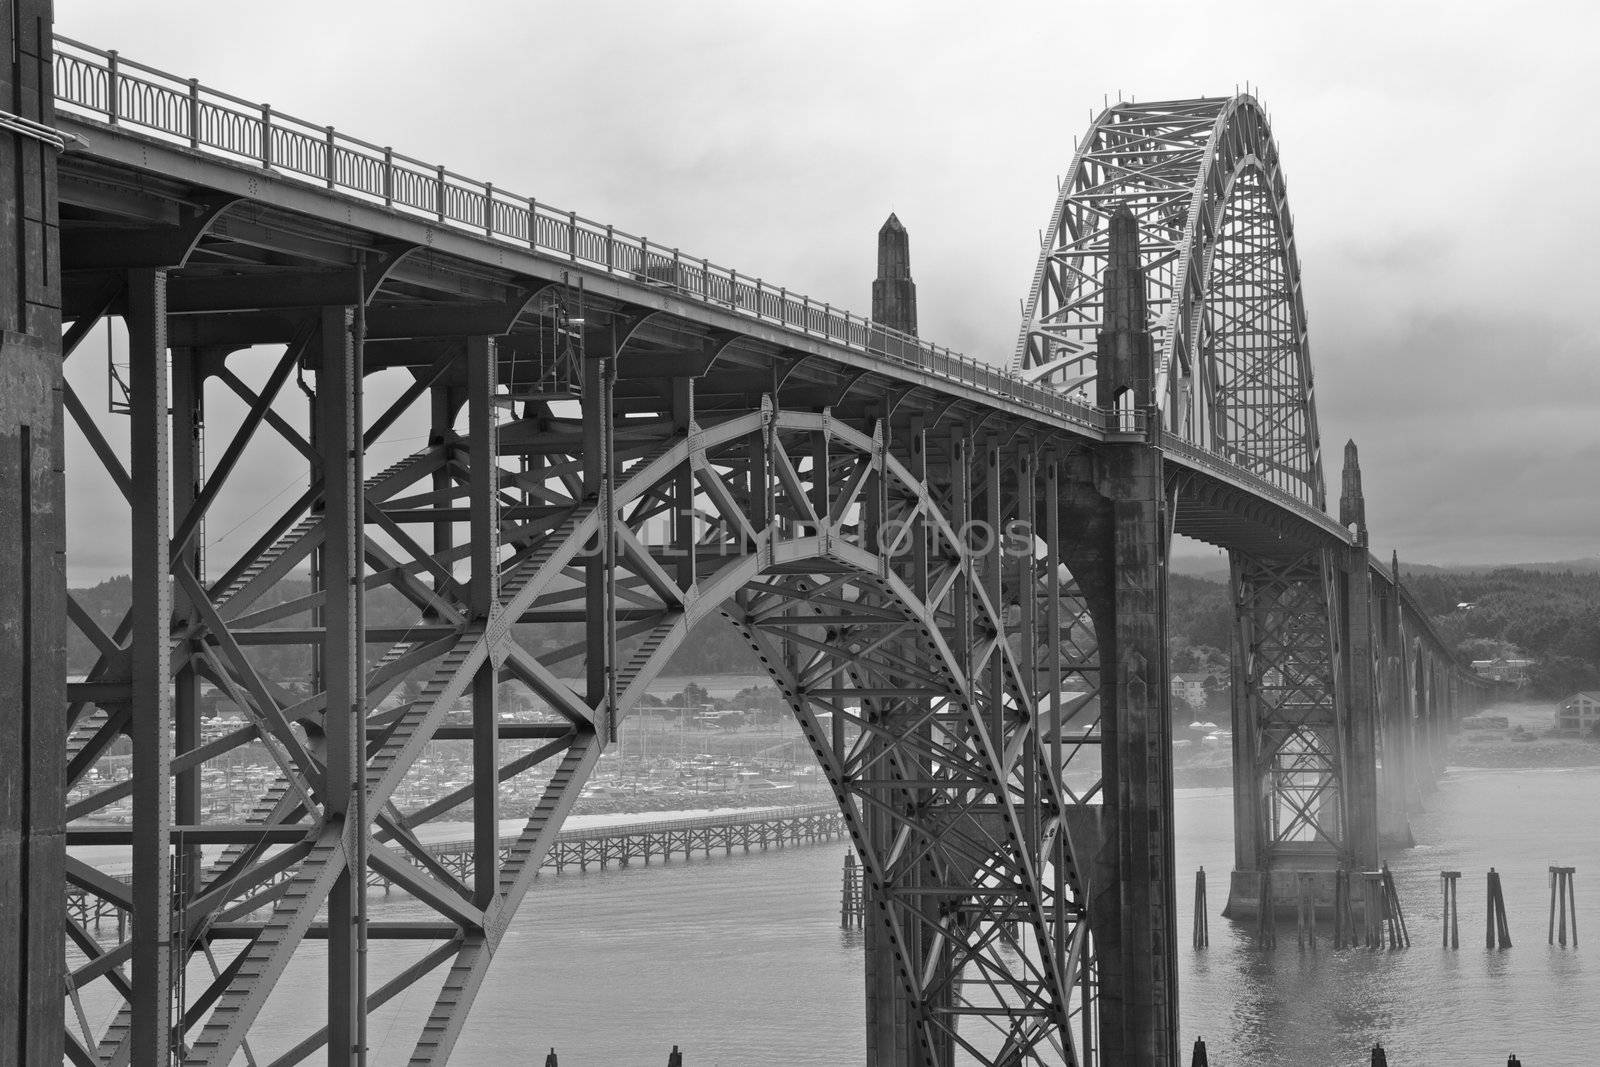 Misty bridge dark HDR ocean side black and white by bobkeenan